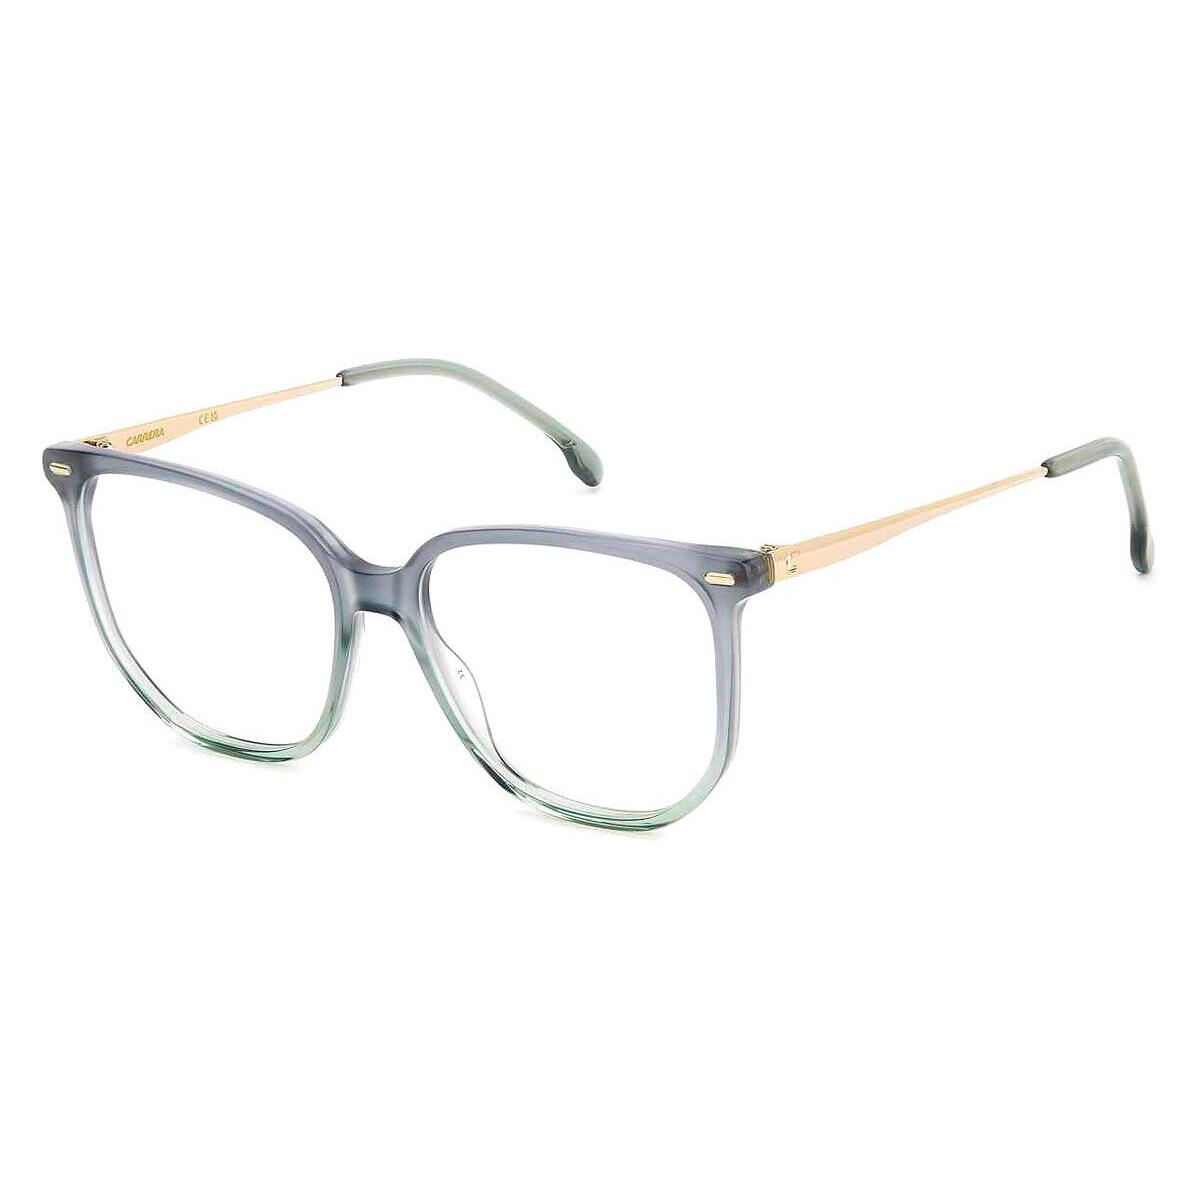 Carrera Car Eyeglasses Women Gray Green 54mm